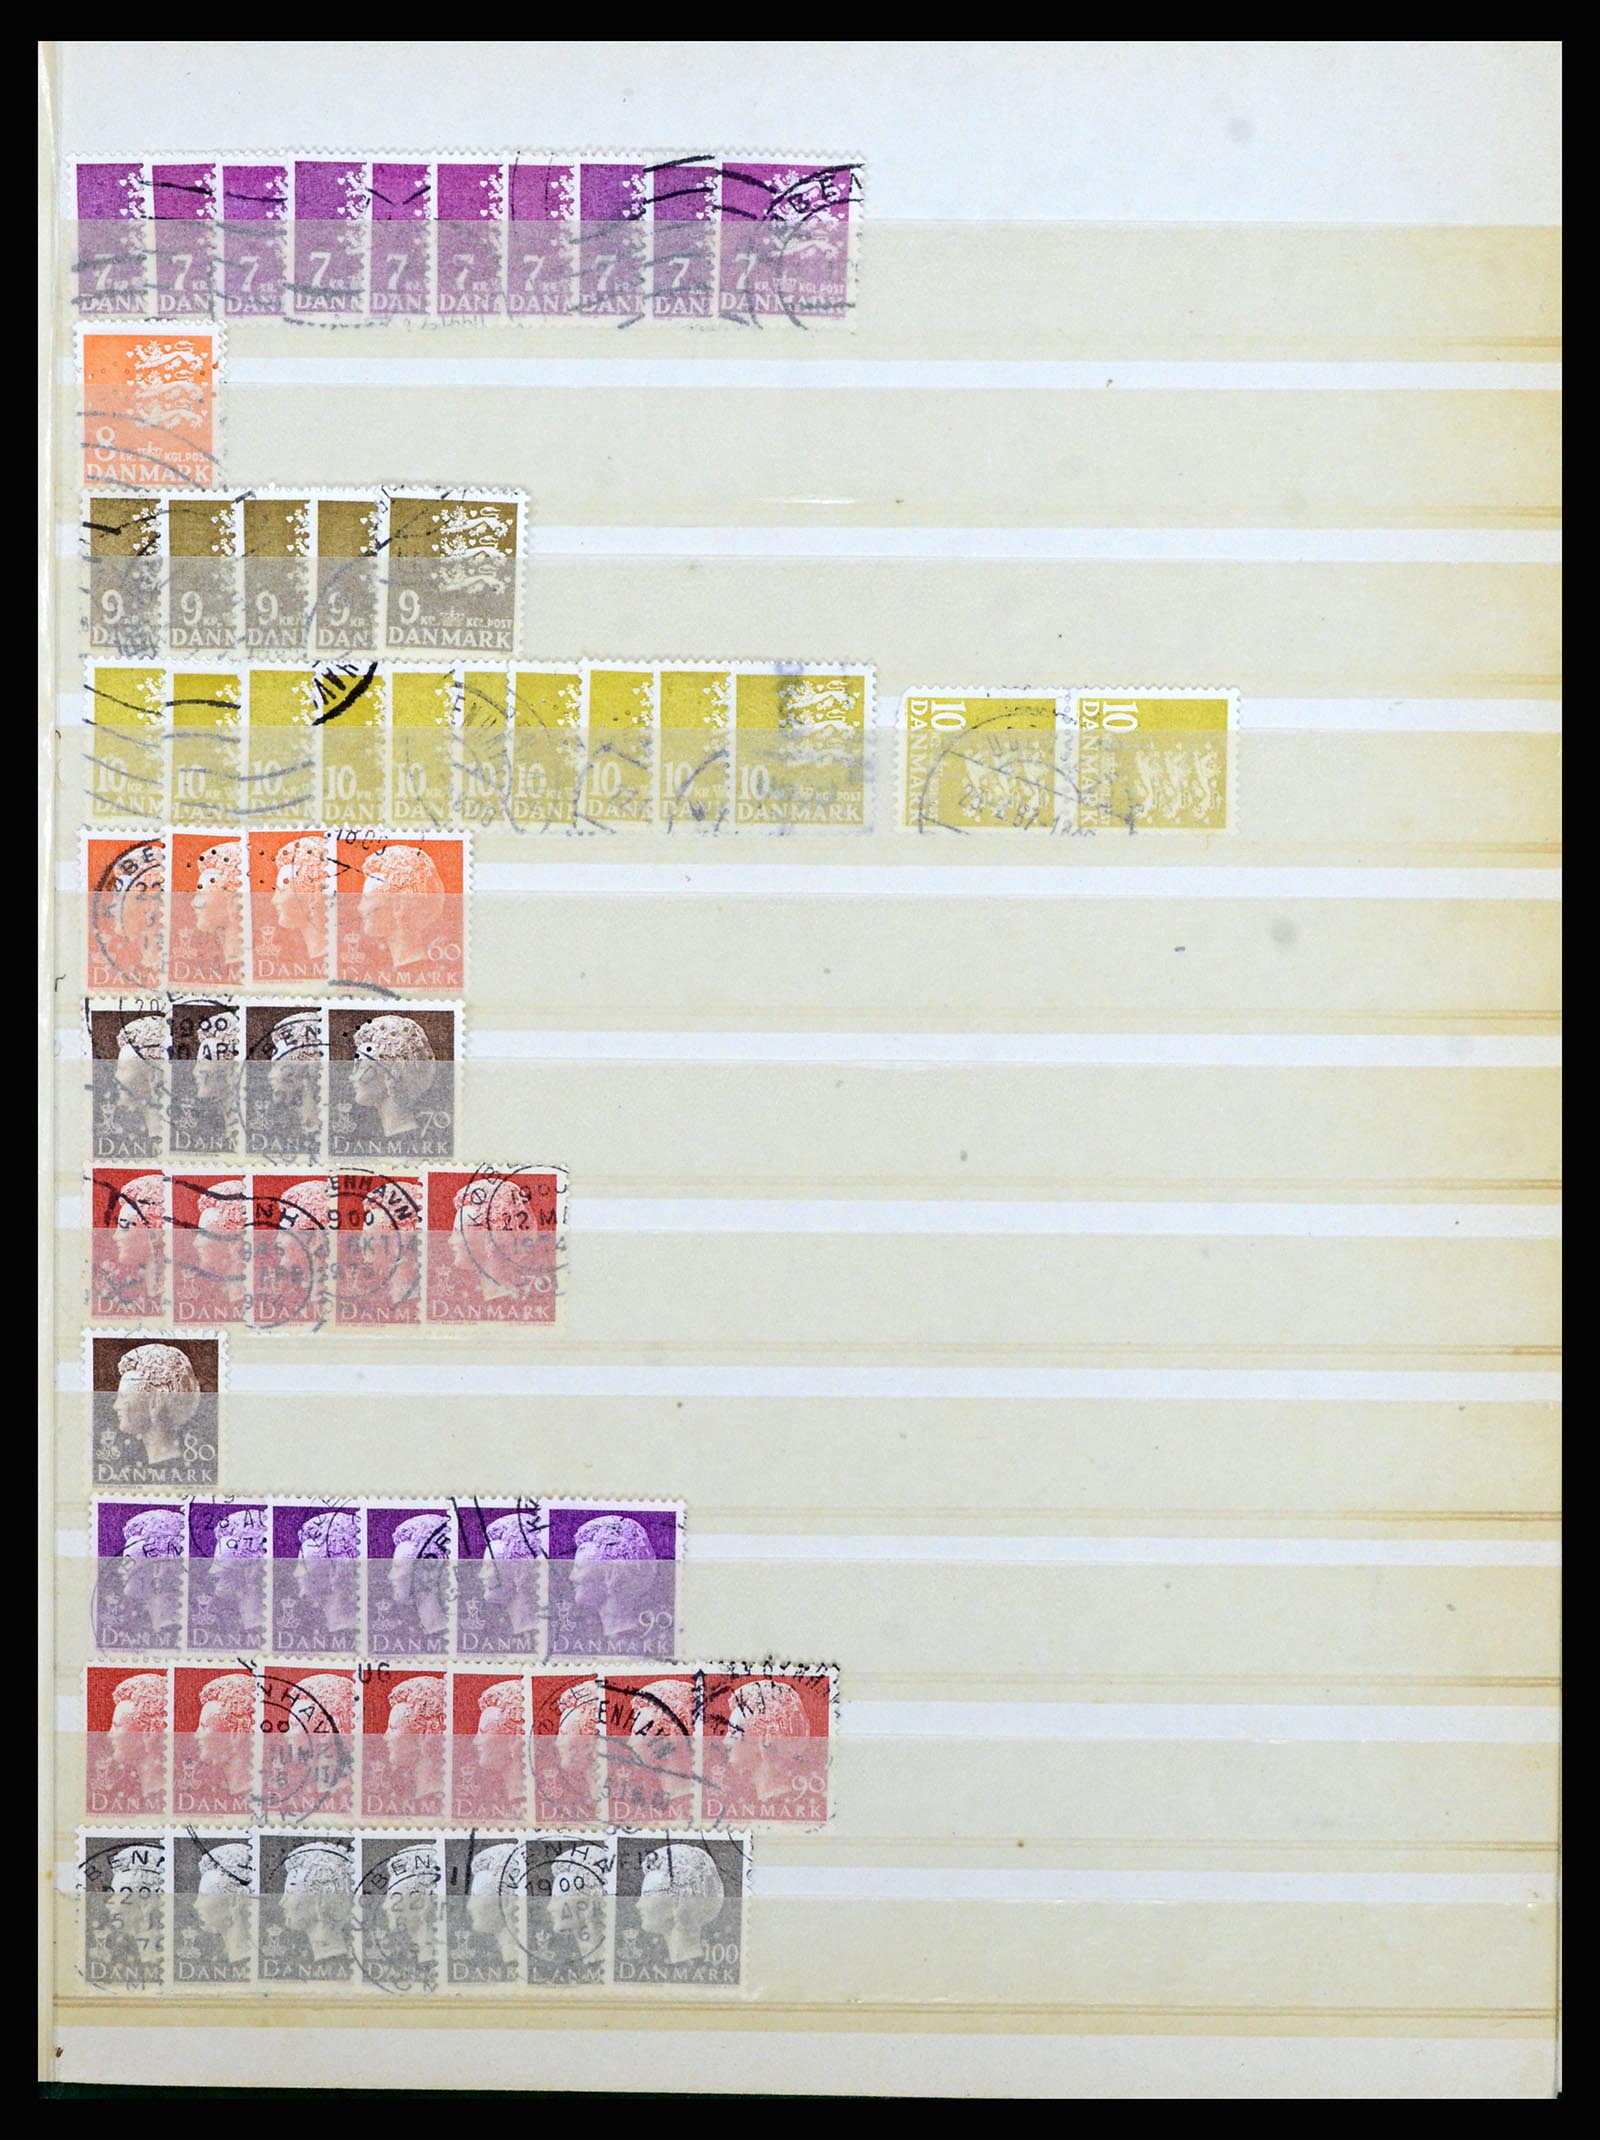 37056 036 - Stamp collection 37056 Denmark perfins.